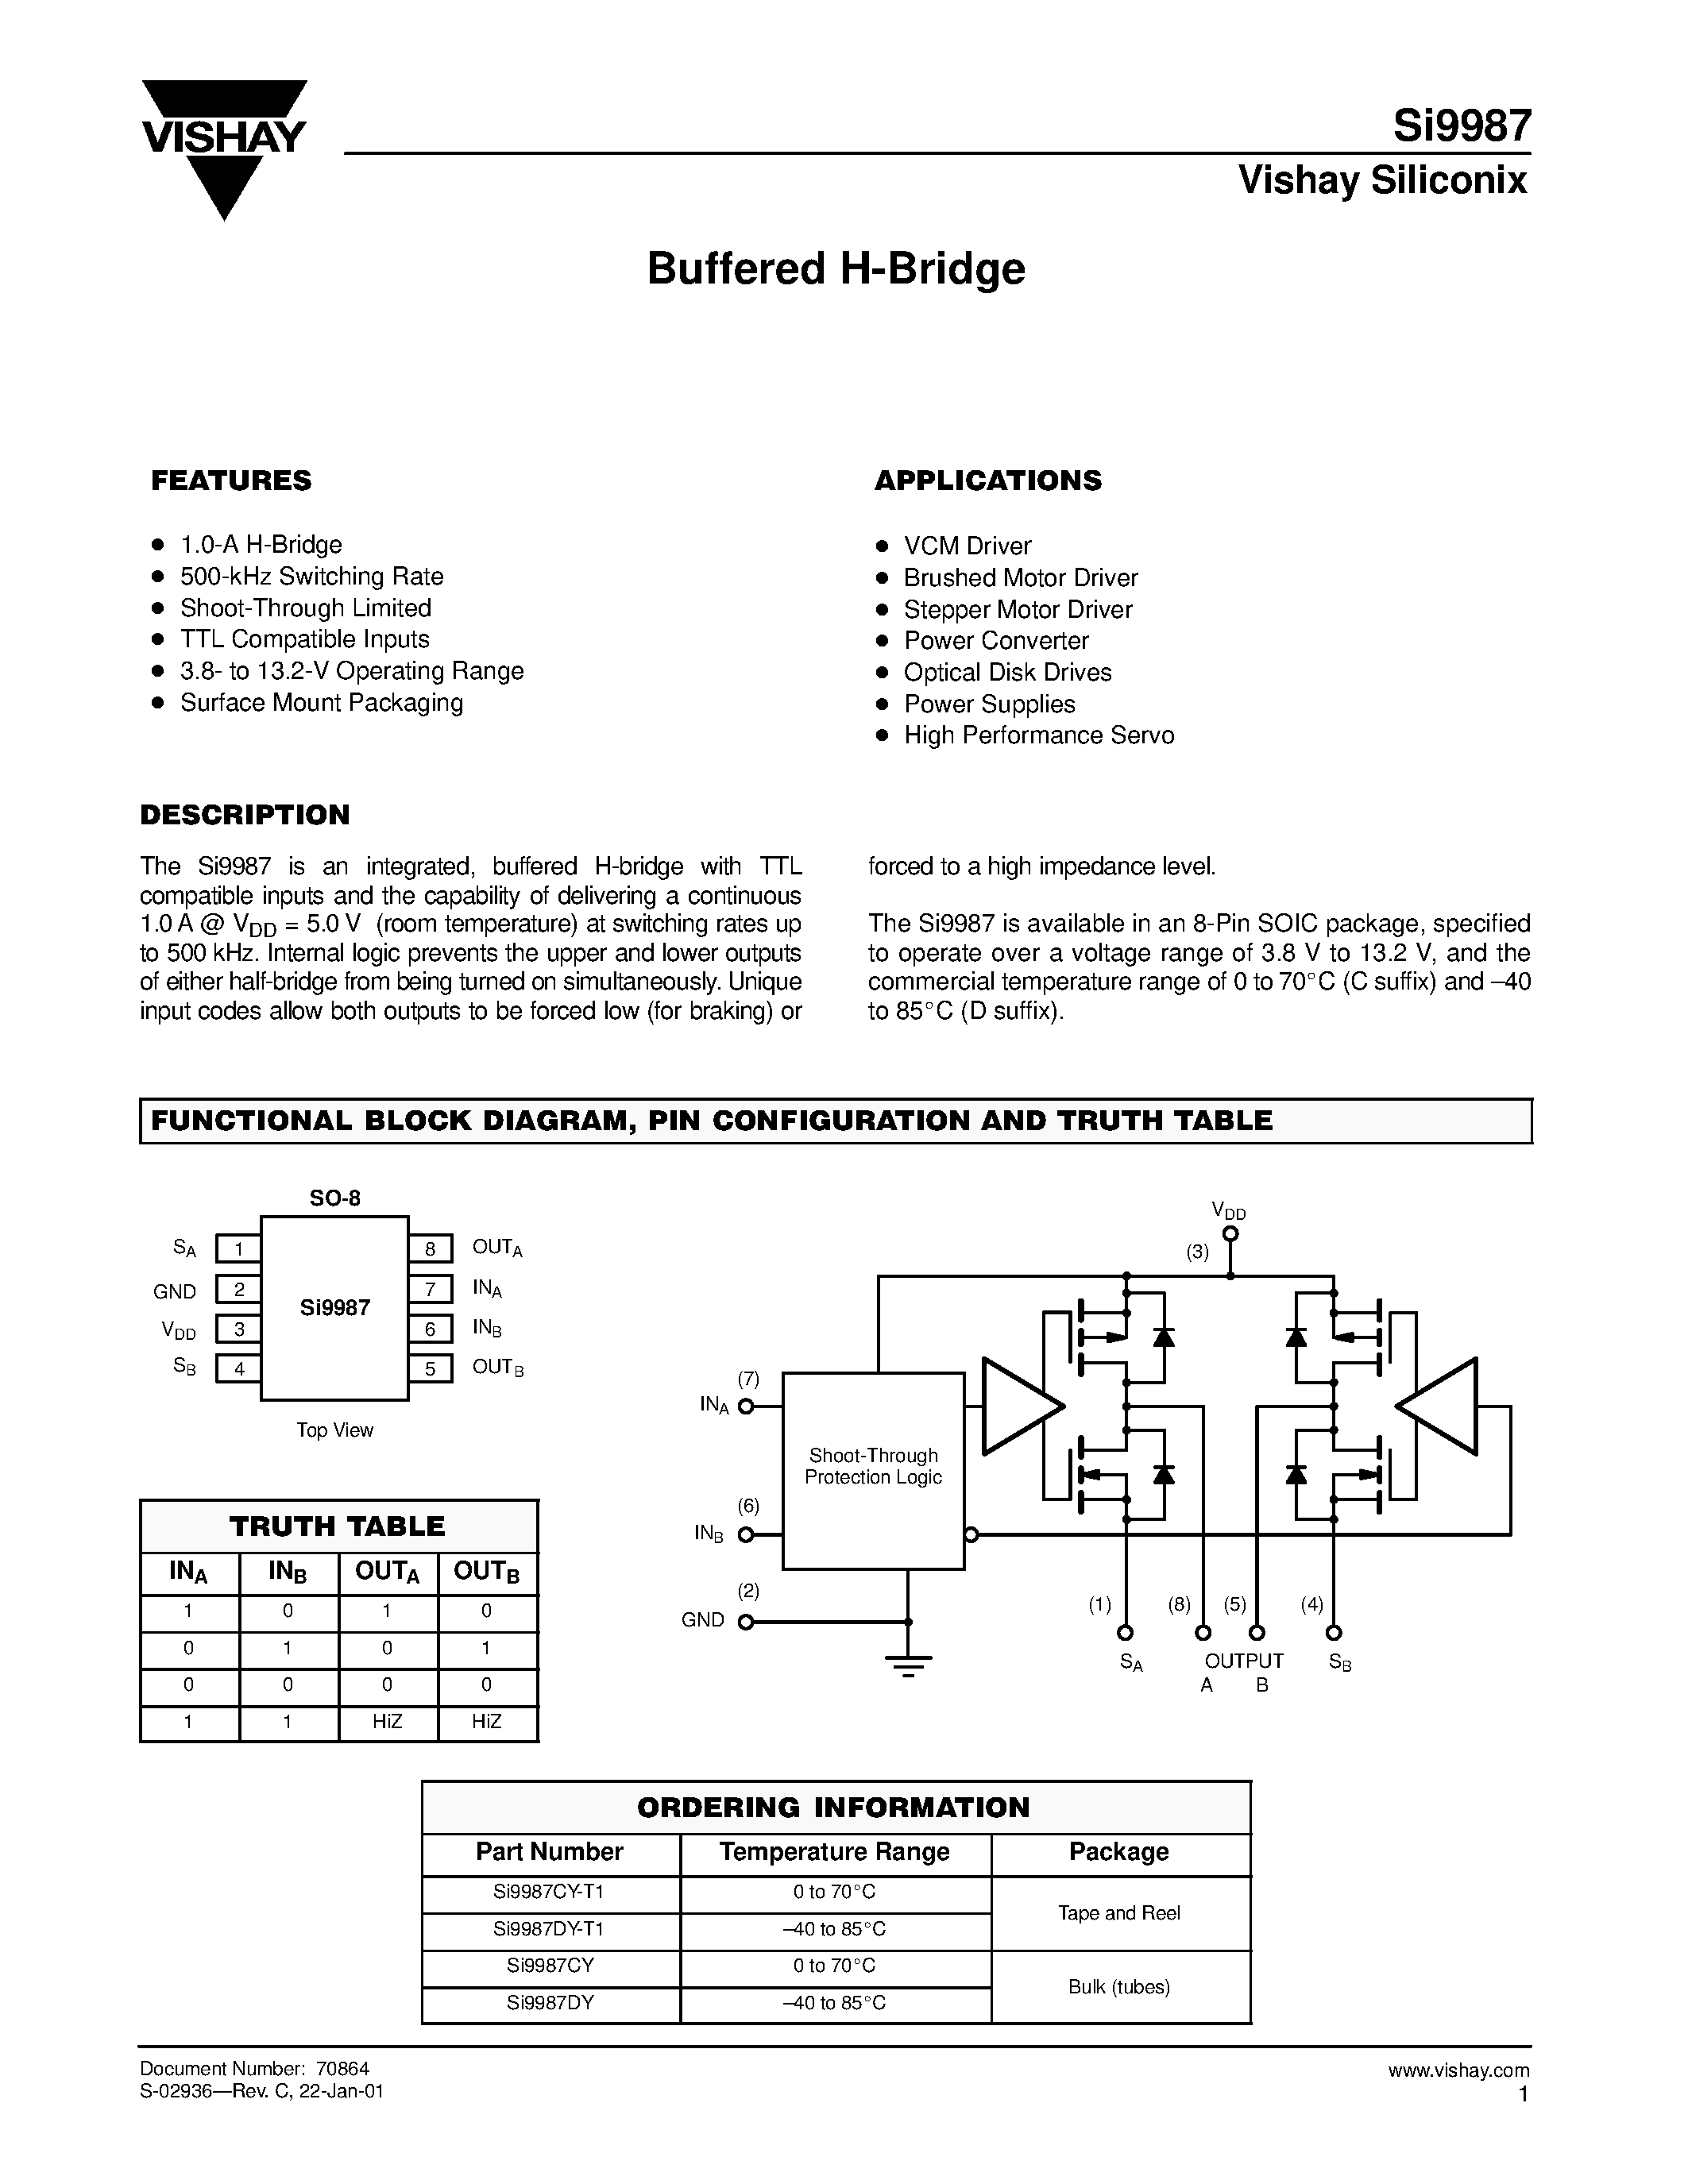 Datasheet SI9987 - Buffered H-Bridge page 1